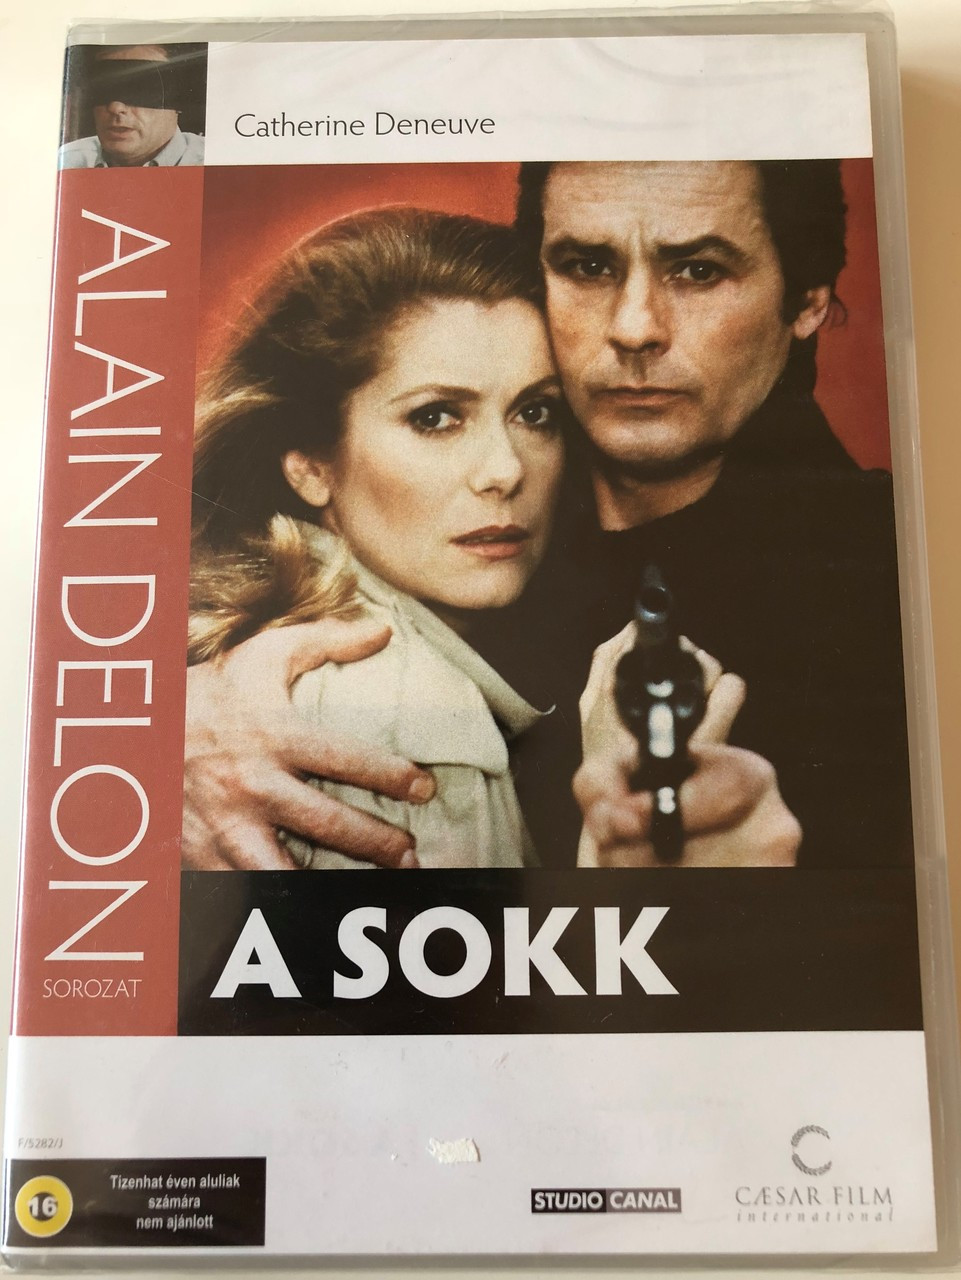 A Sokk DVD 1982 Le Choc (The Shock) / Directed by Robin Davis / Starring:  Alain Delon, Catherine Denevue - bibleinmylanguage